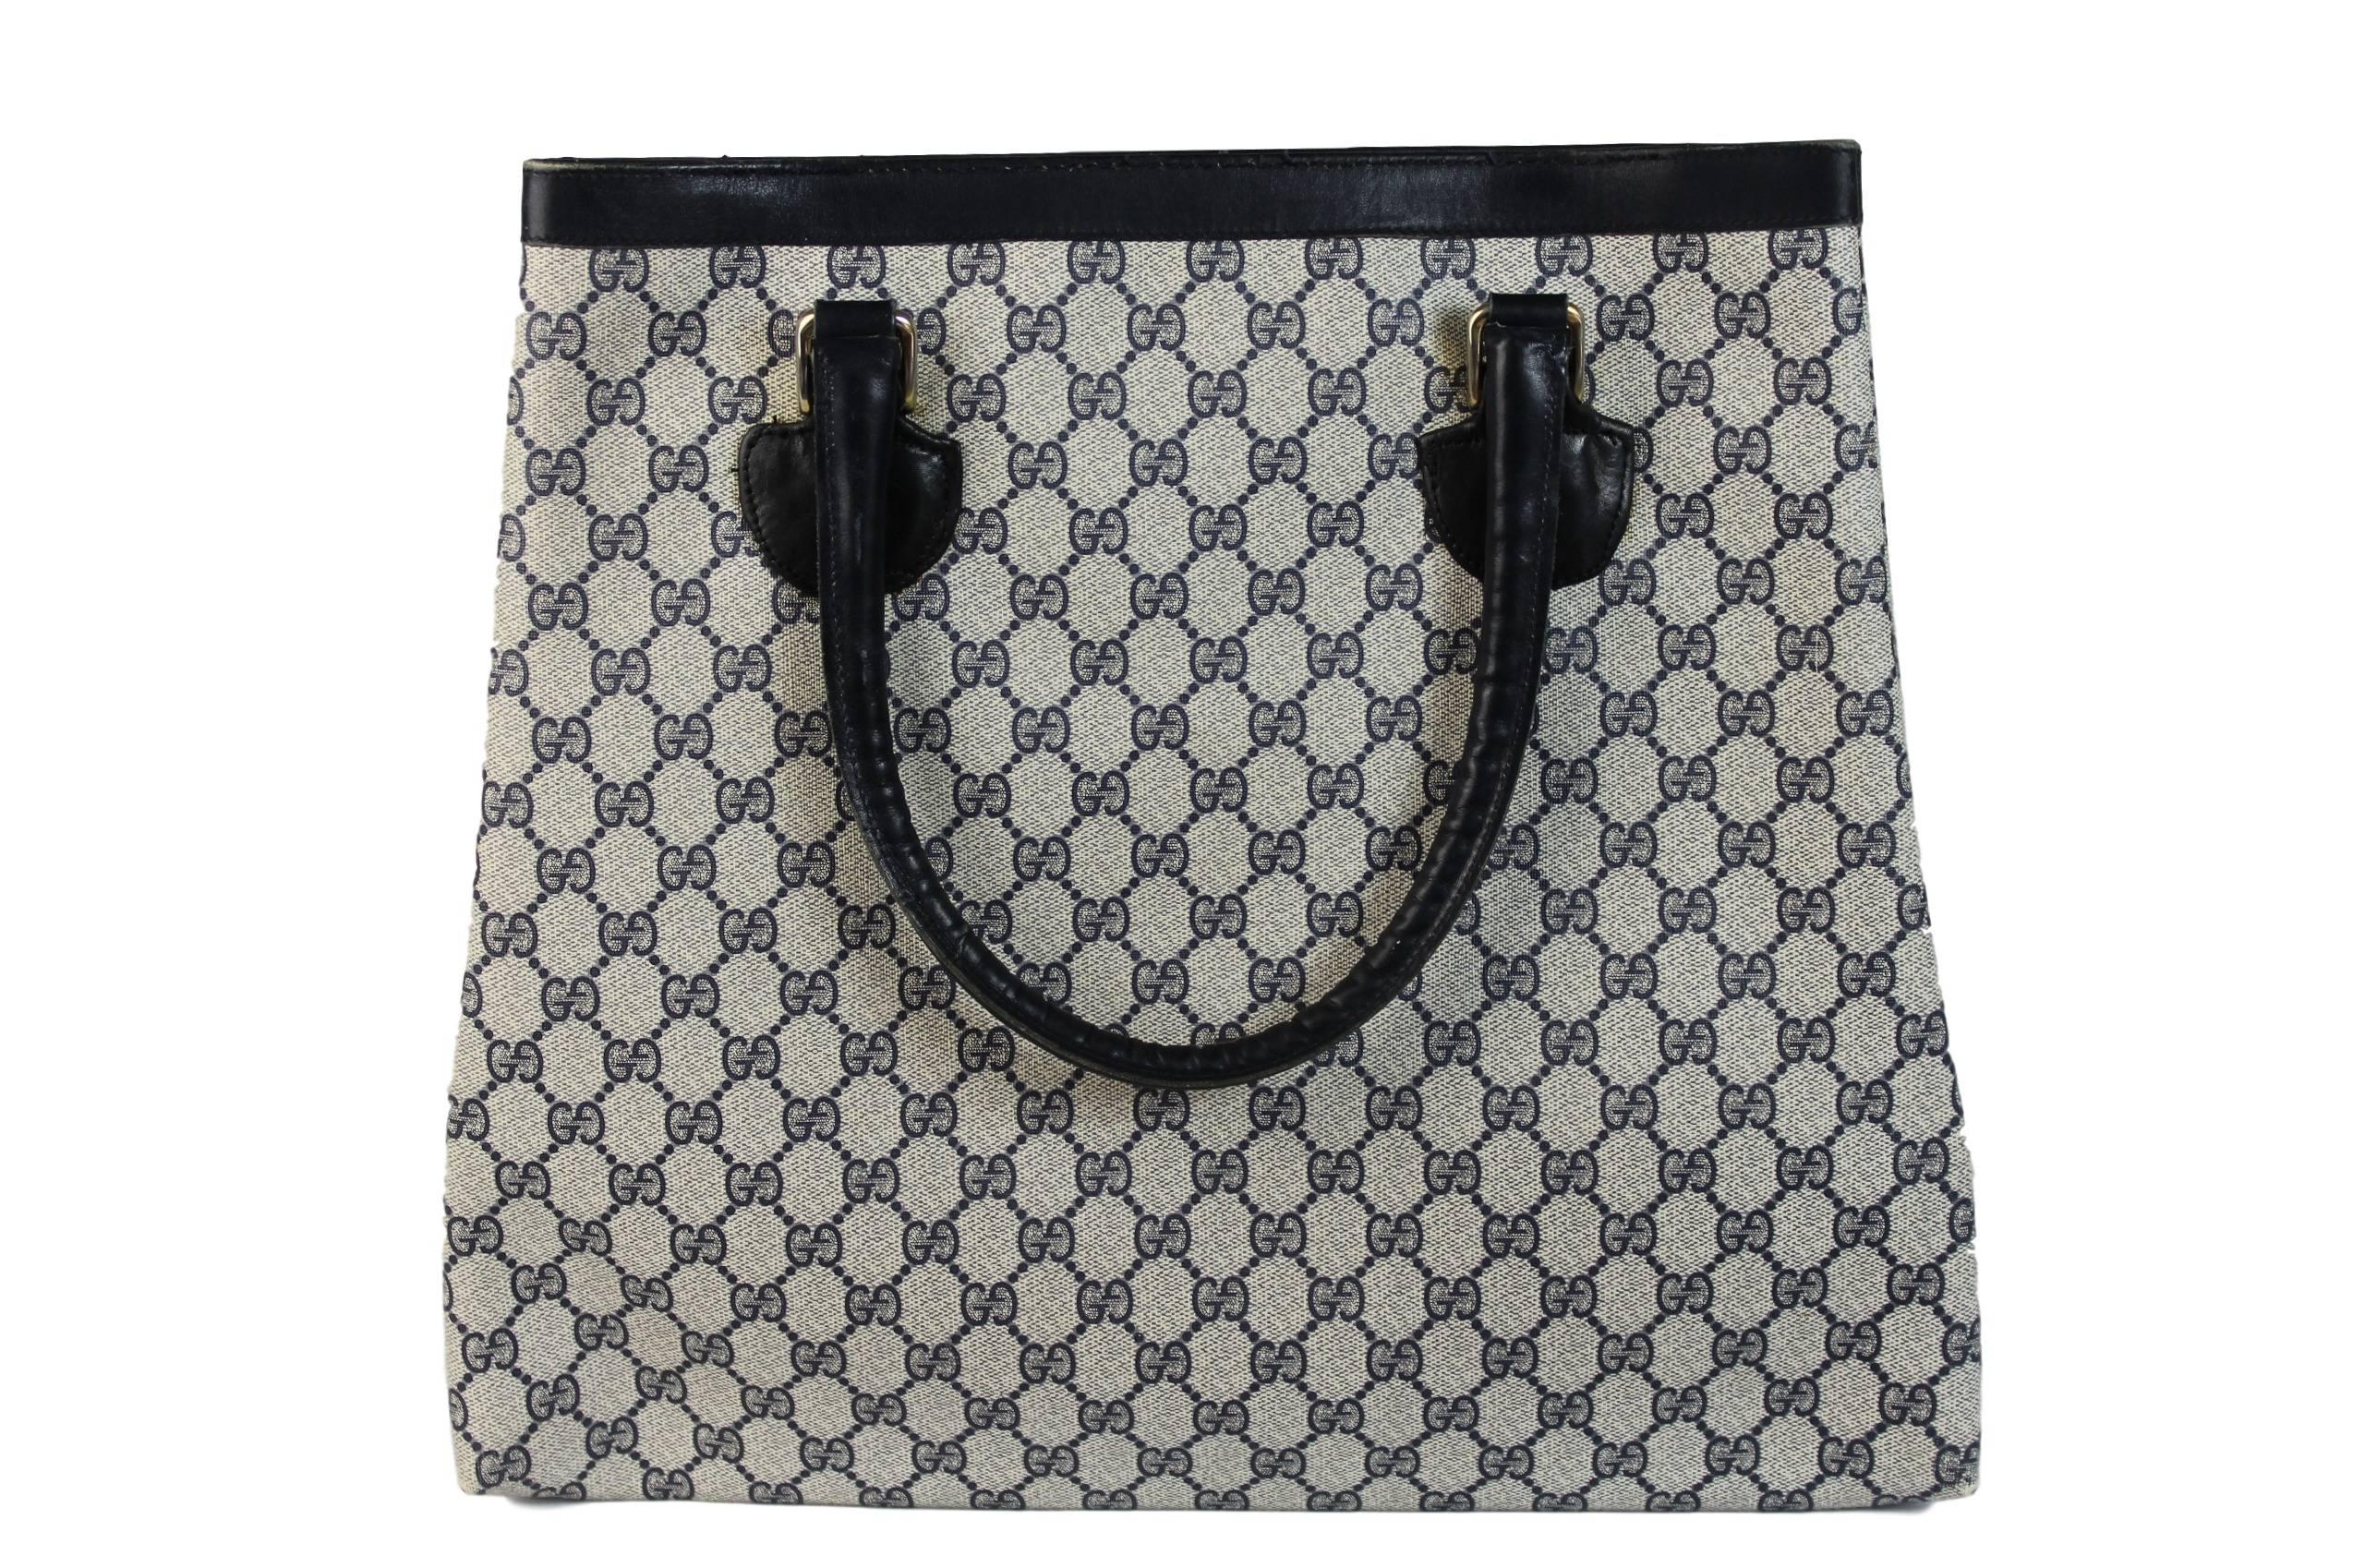 Gray Gucci monogram 1980'si shopper leather bag blue tote handbag